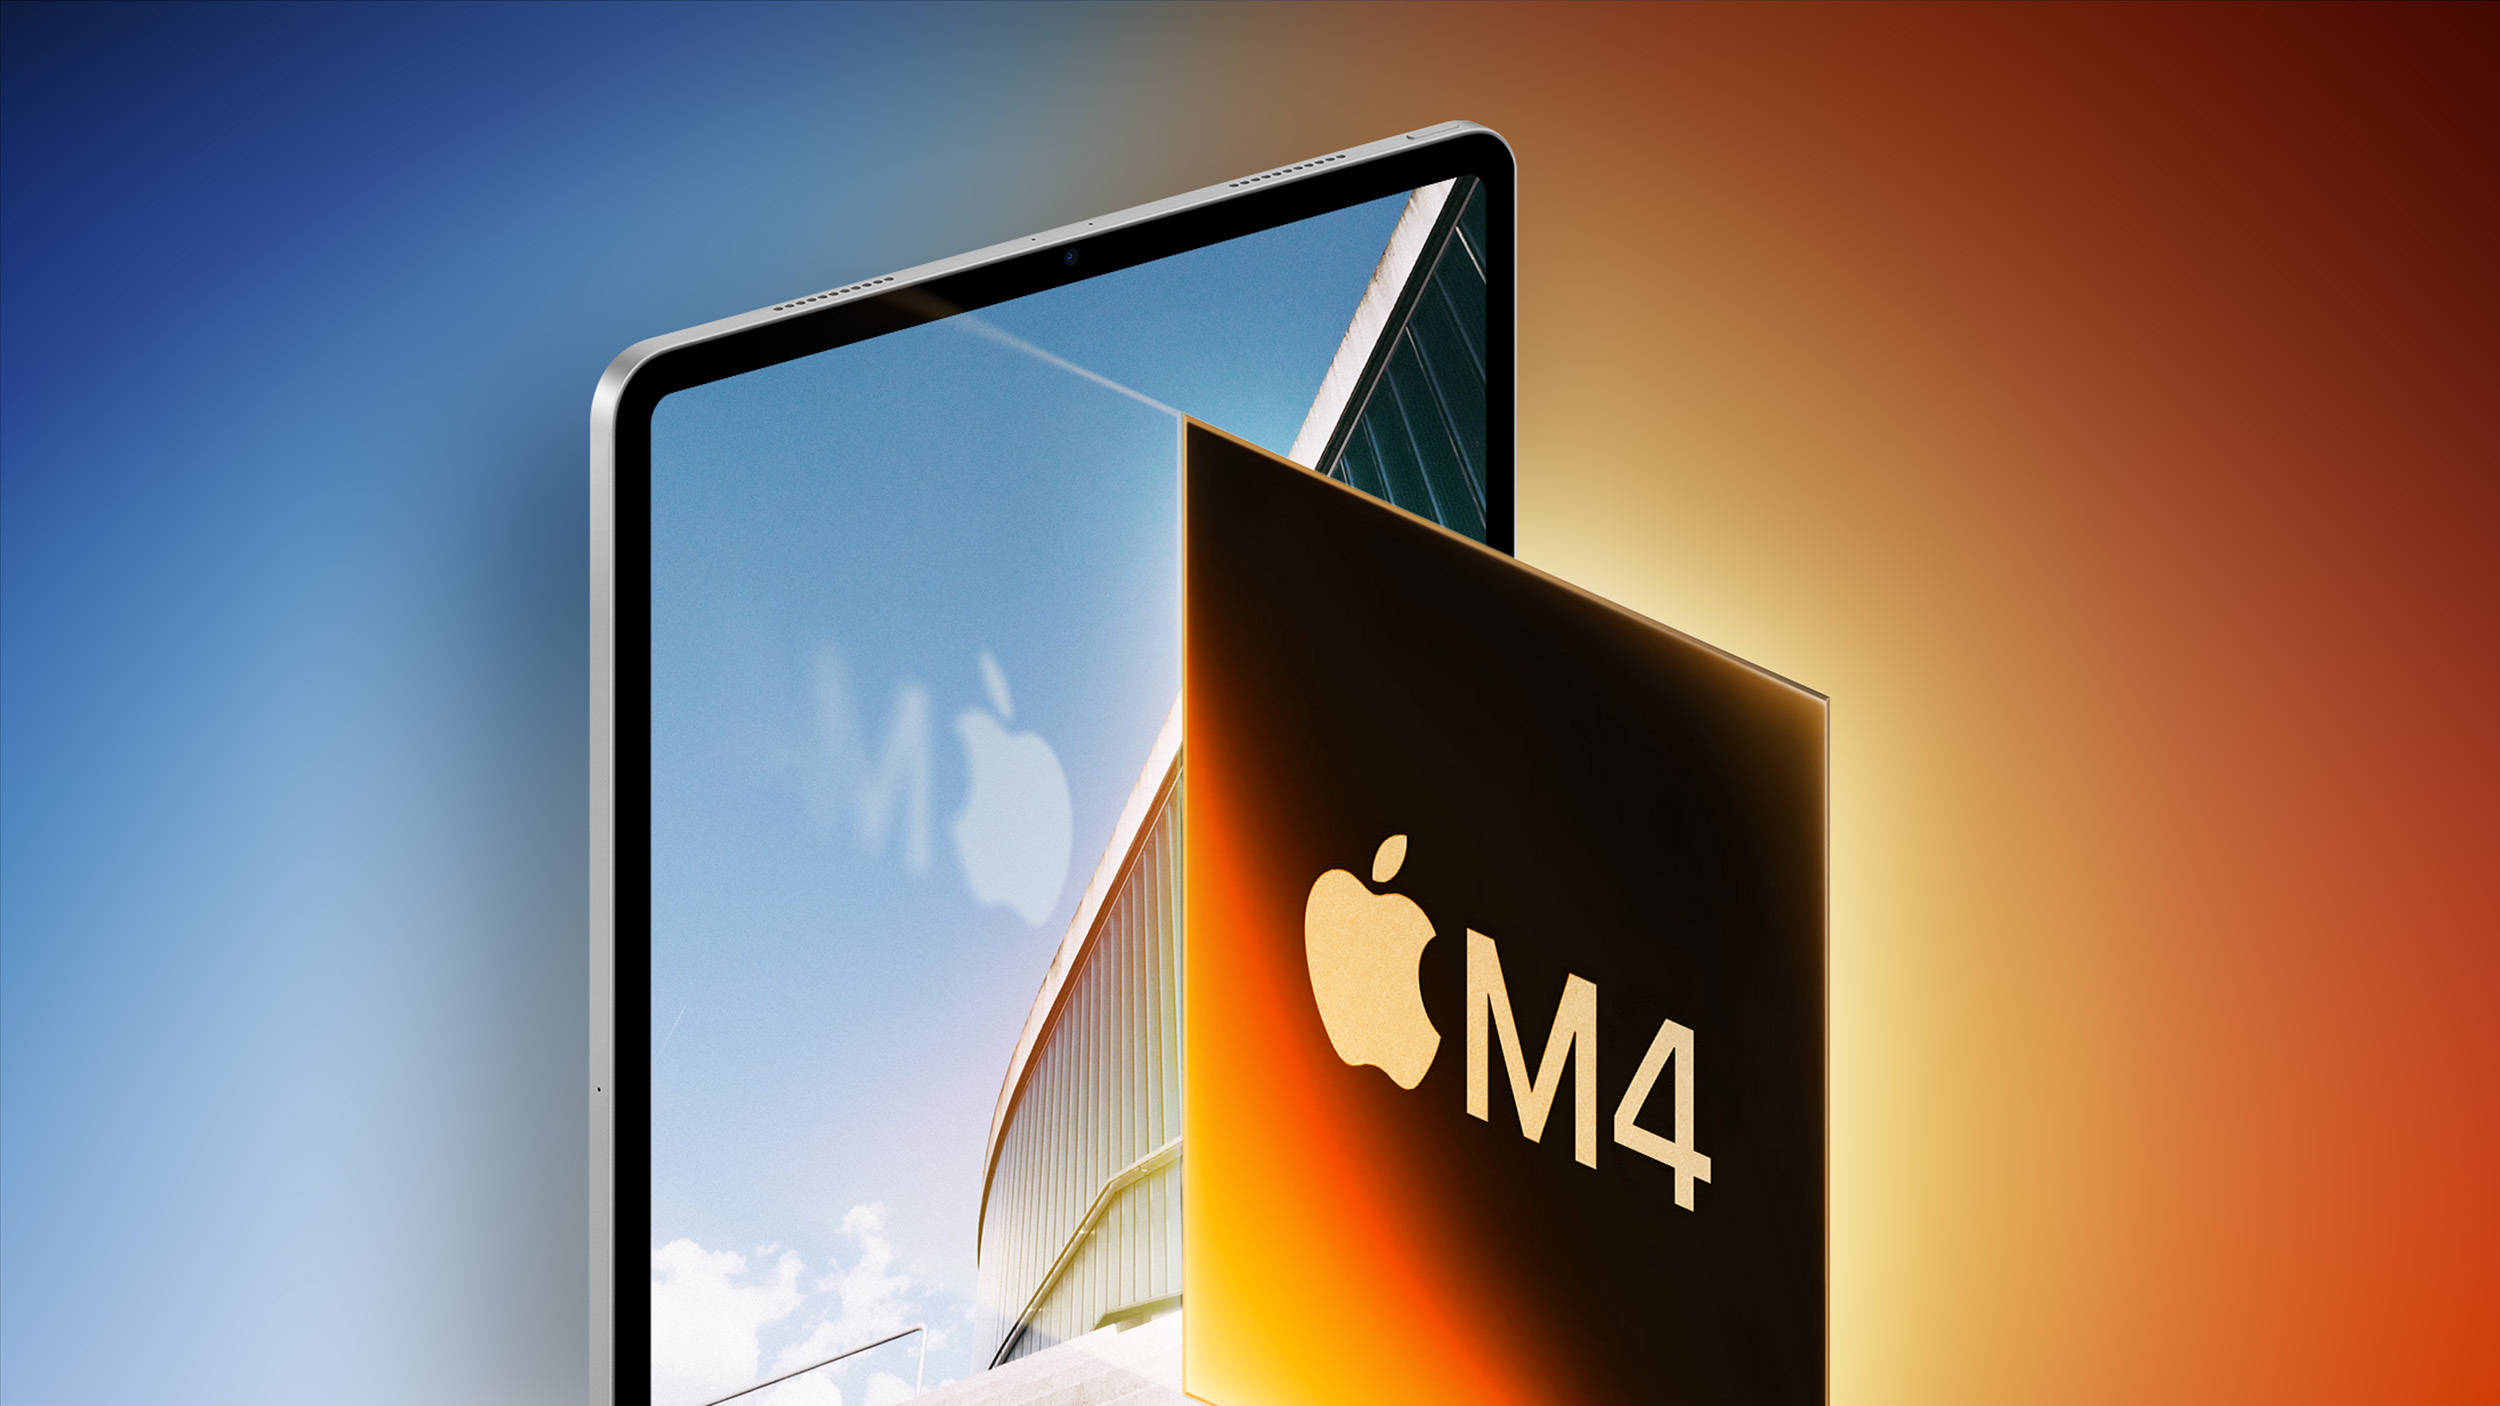 M4 iPad Pro Thumb 2